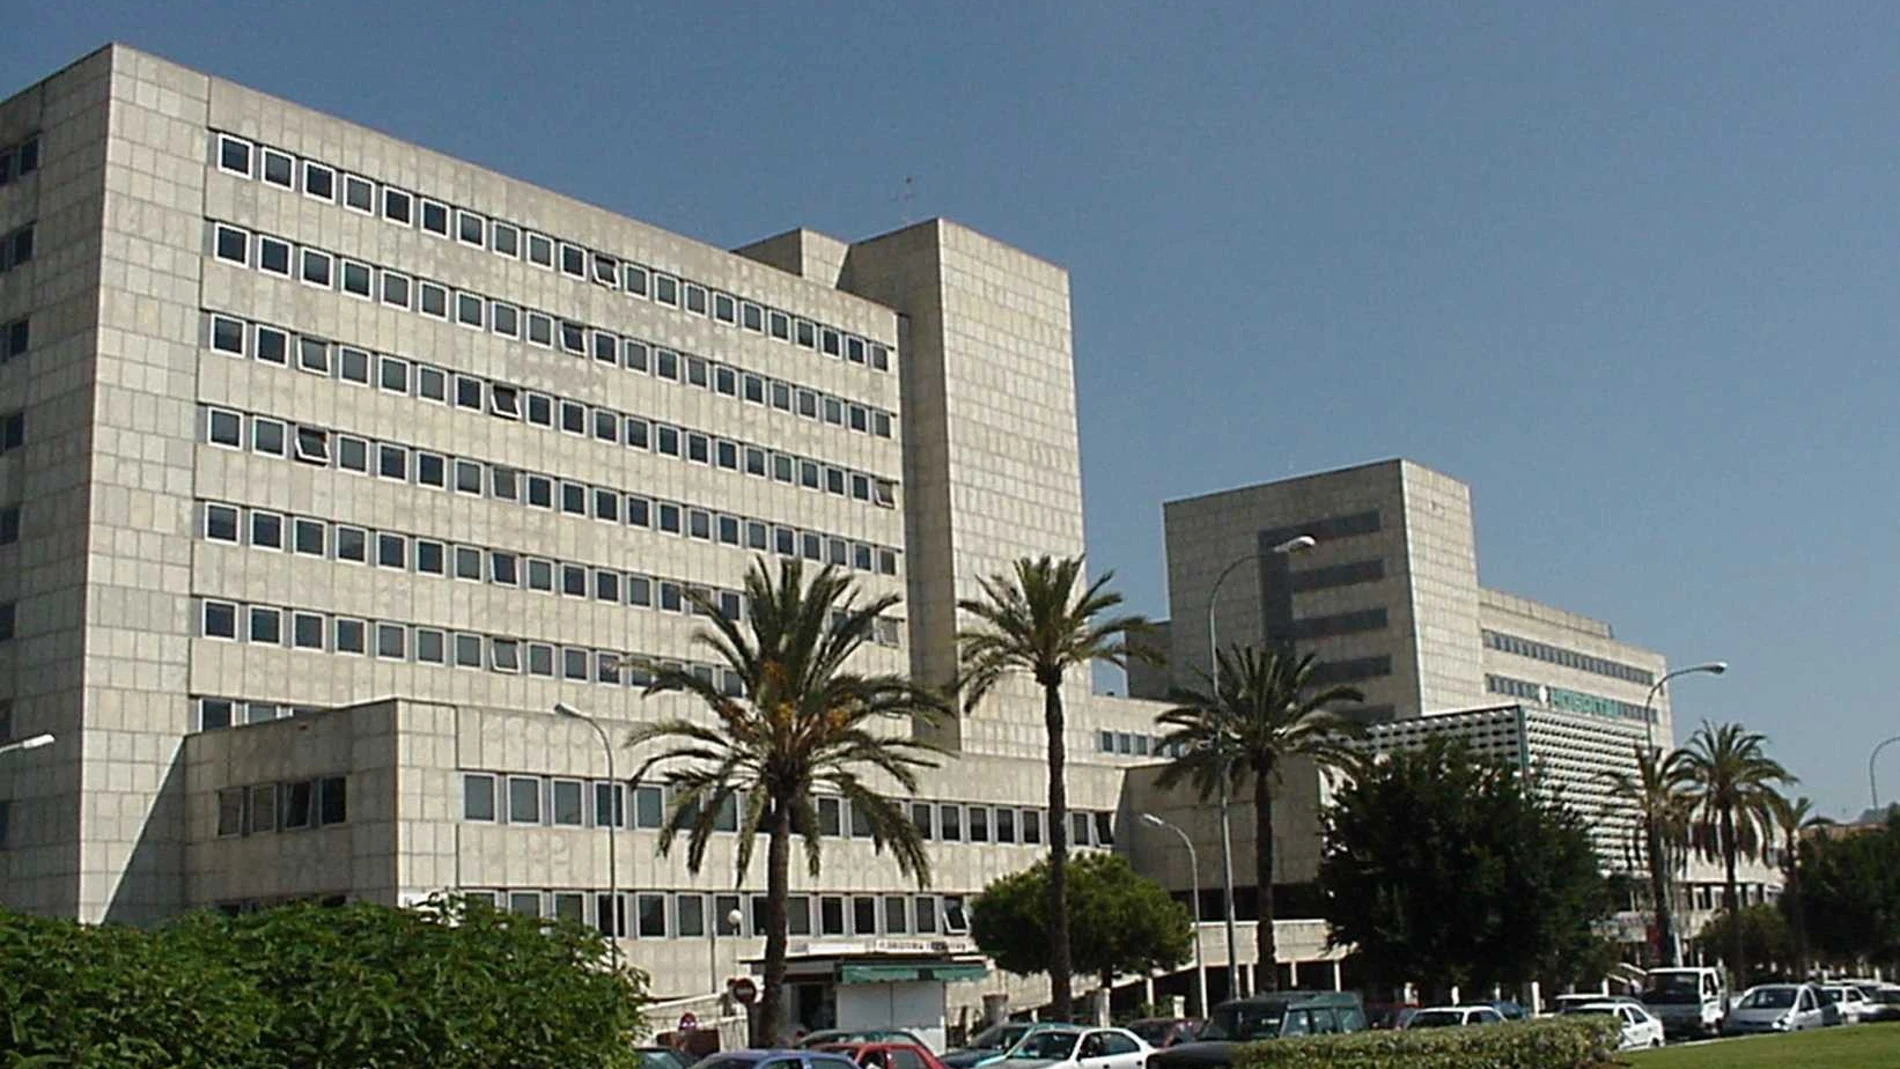 Vista Principal Del Hospital Materno Infantil De Málaga. EUROPA PRESS/JUNTA DE ANDALUCÍA (Foto de ARCHIVO)